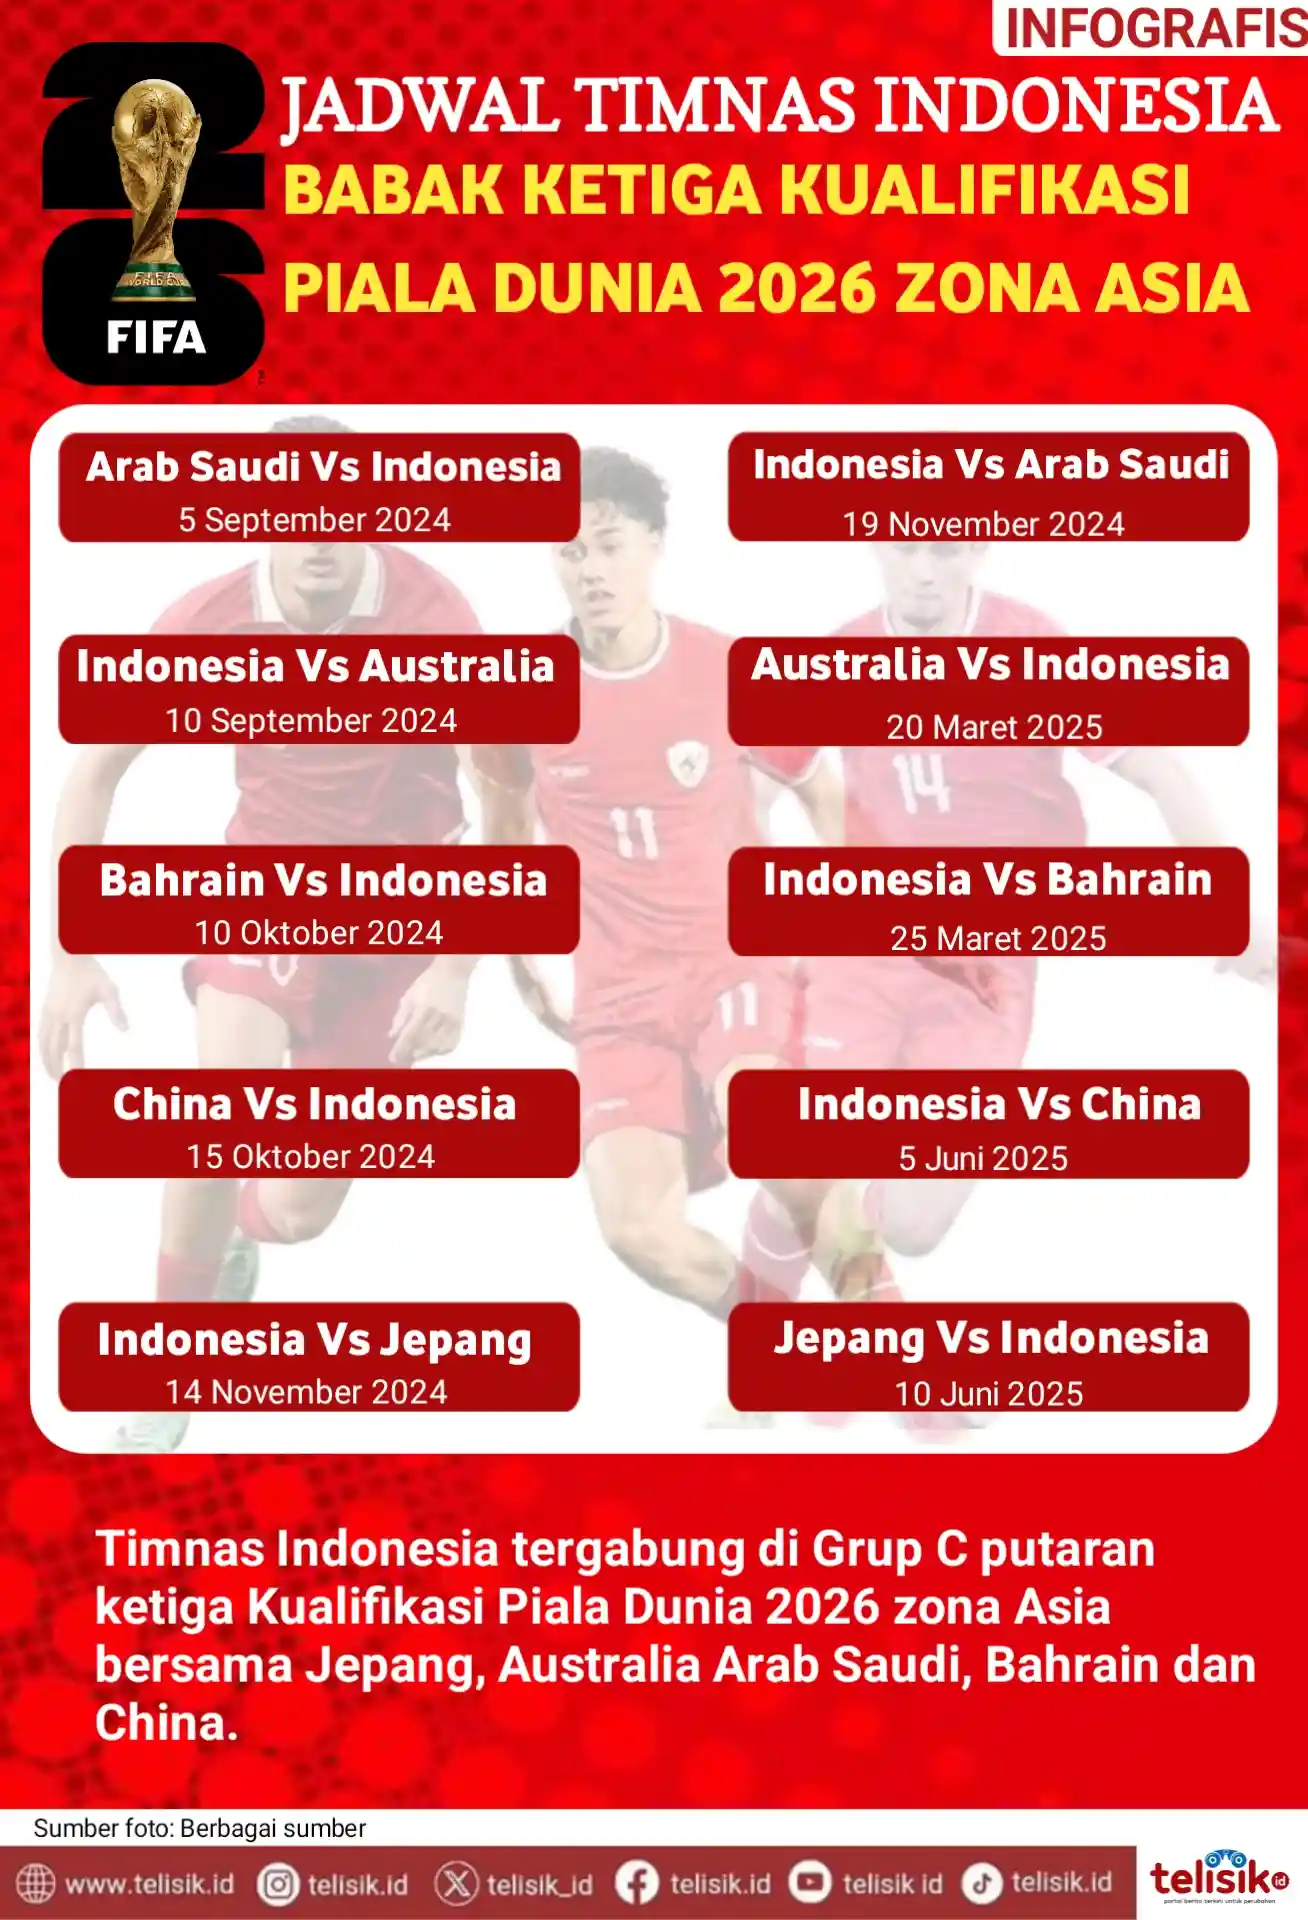 Infografis: Jadwal Timnas Indonesia Babak Ketiga Kualifikasi Piala Dunia 2026 Zona Asia 